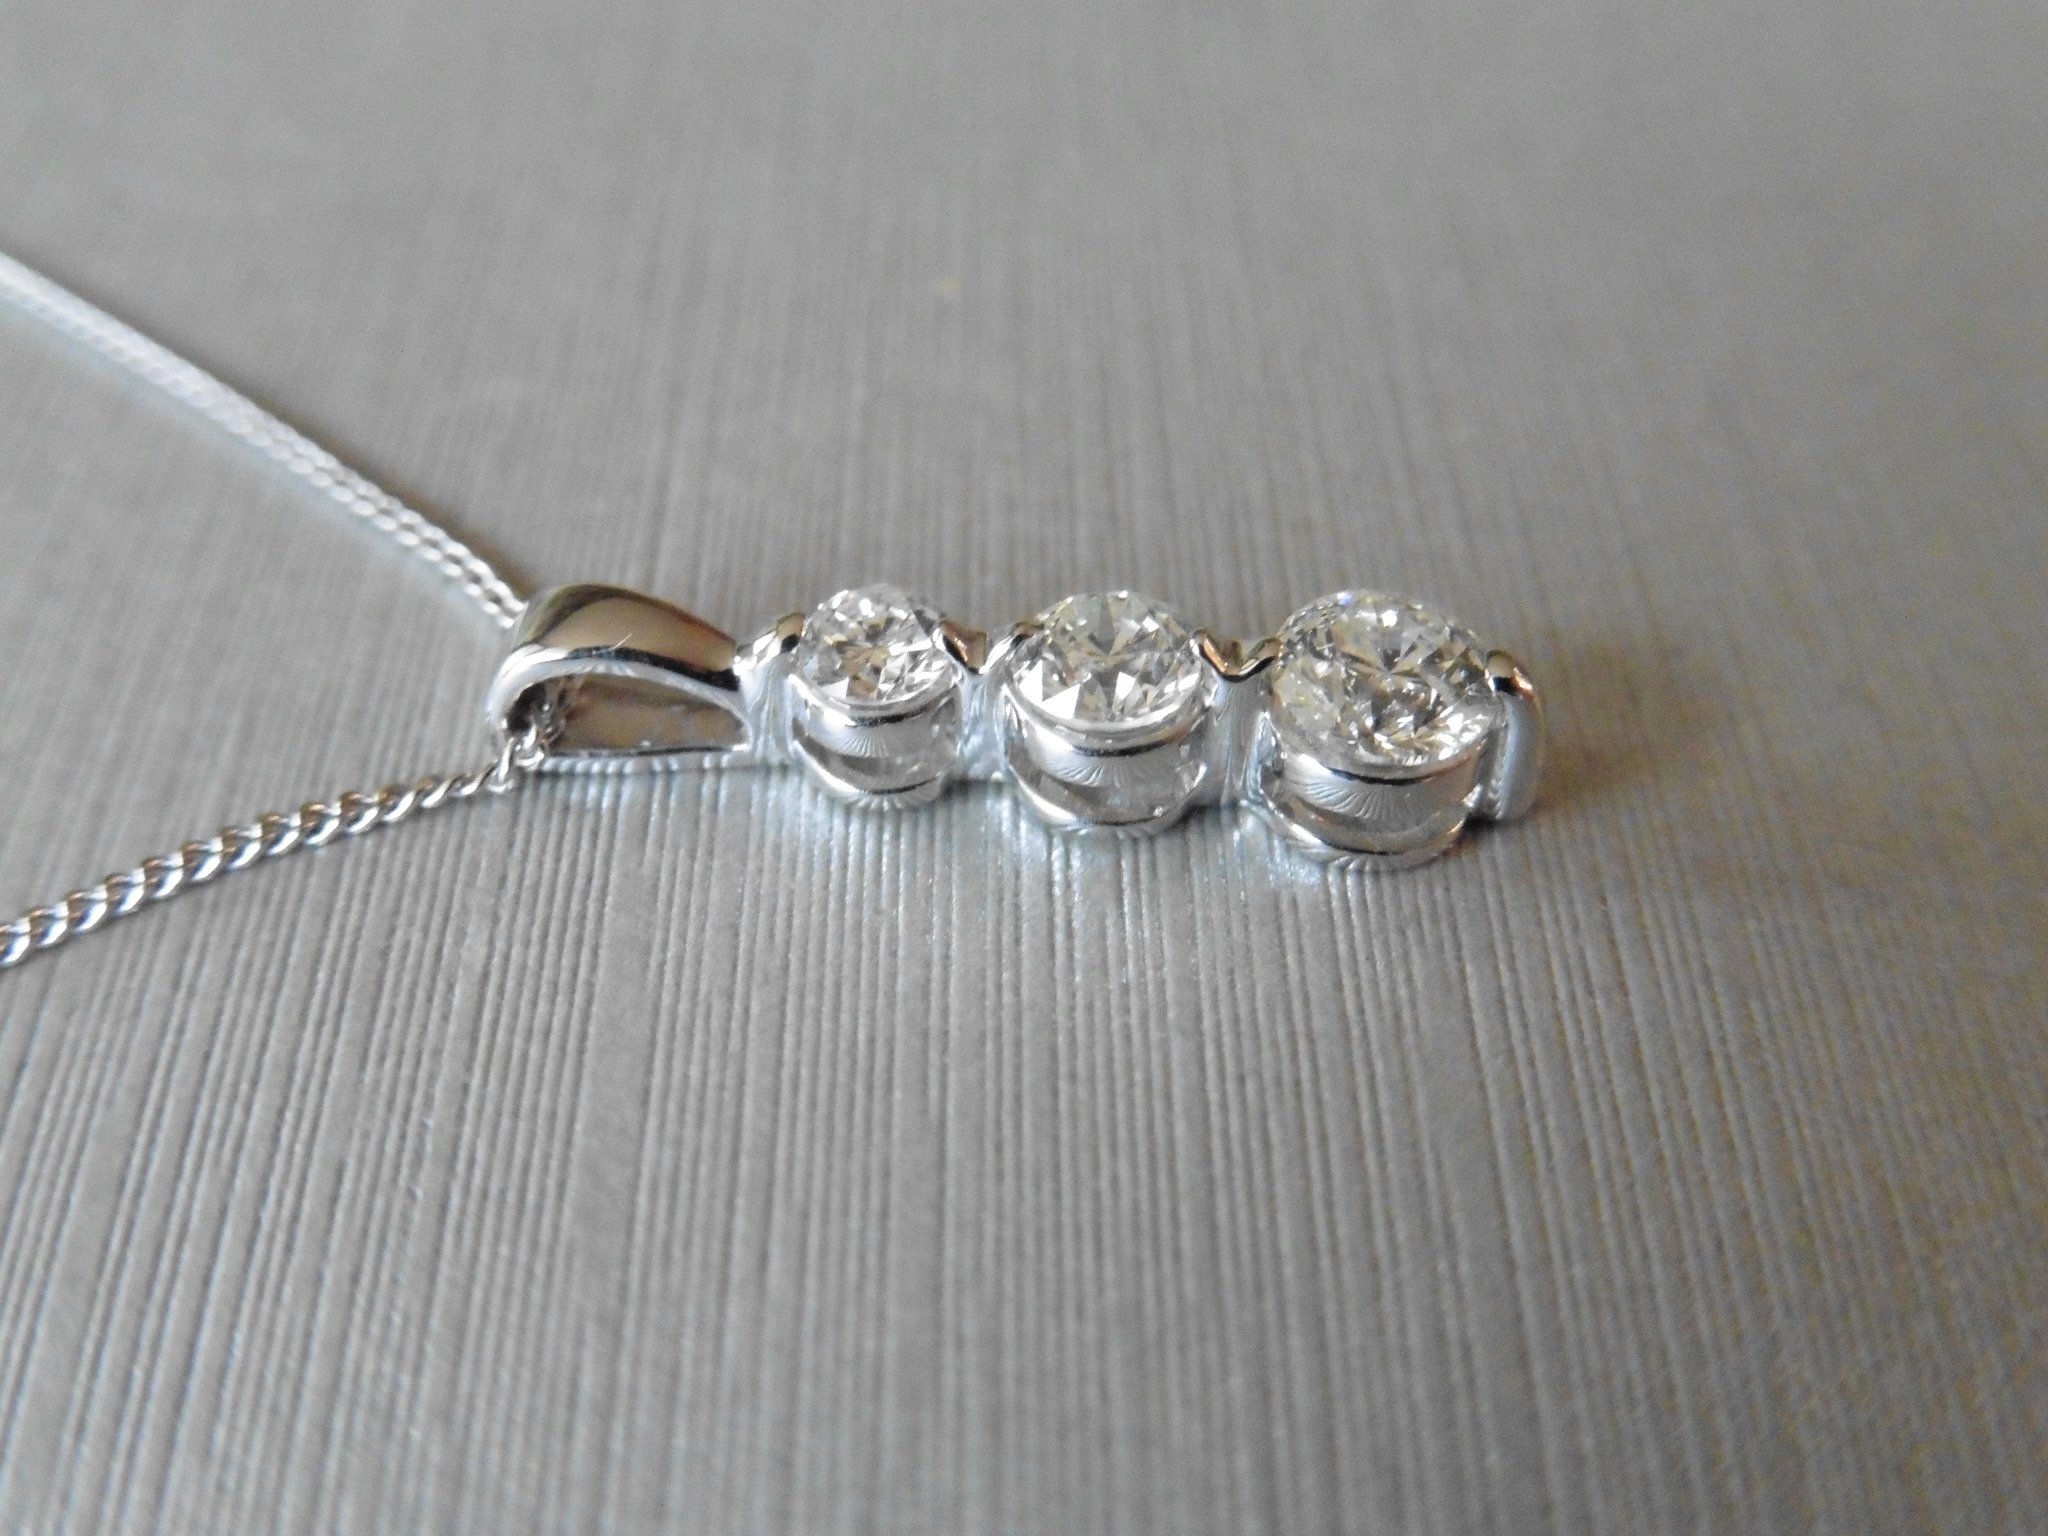 0.75ct Trilogy style pendant set with 3 graduated brilliant cut diamonds, I colour, Si2 clarity. Set